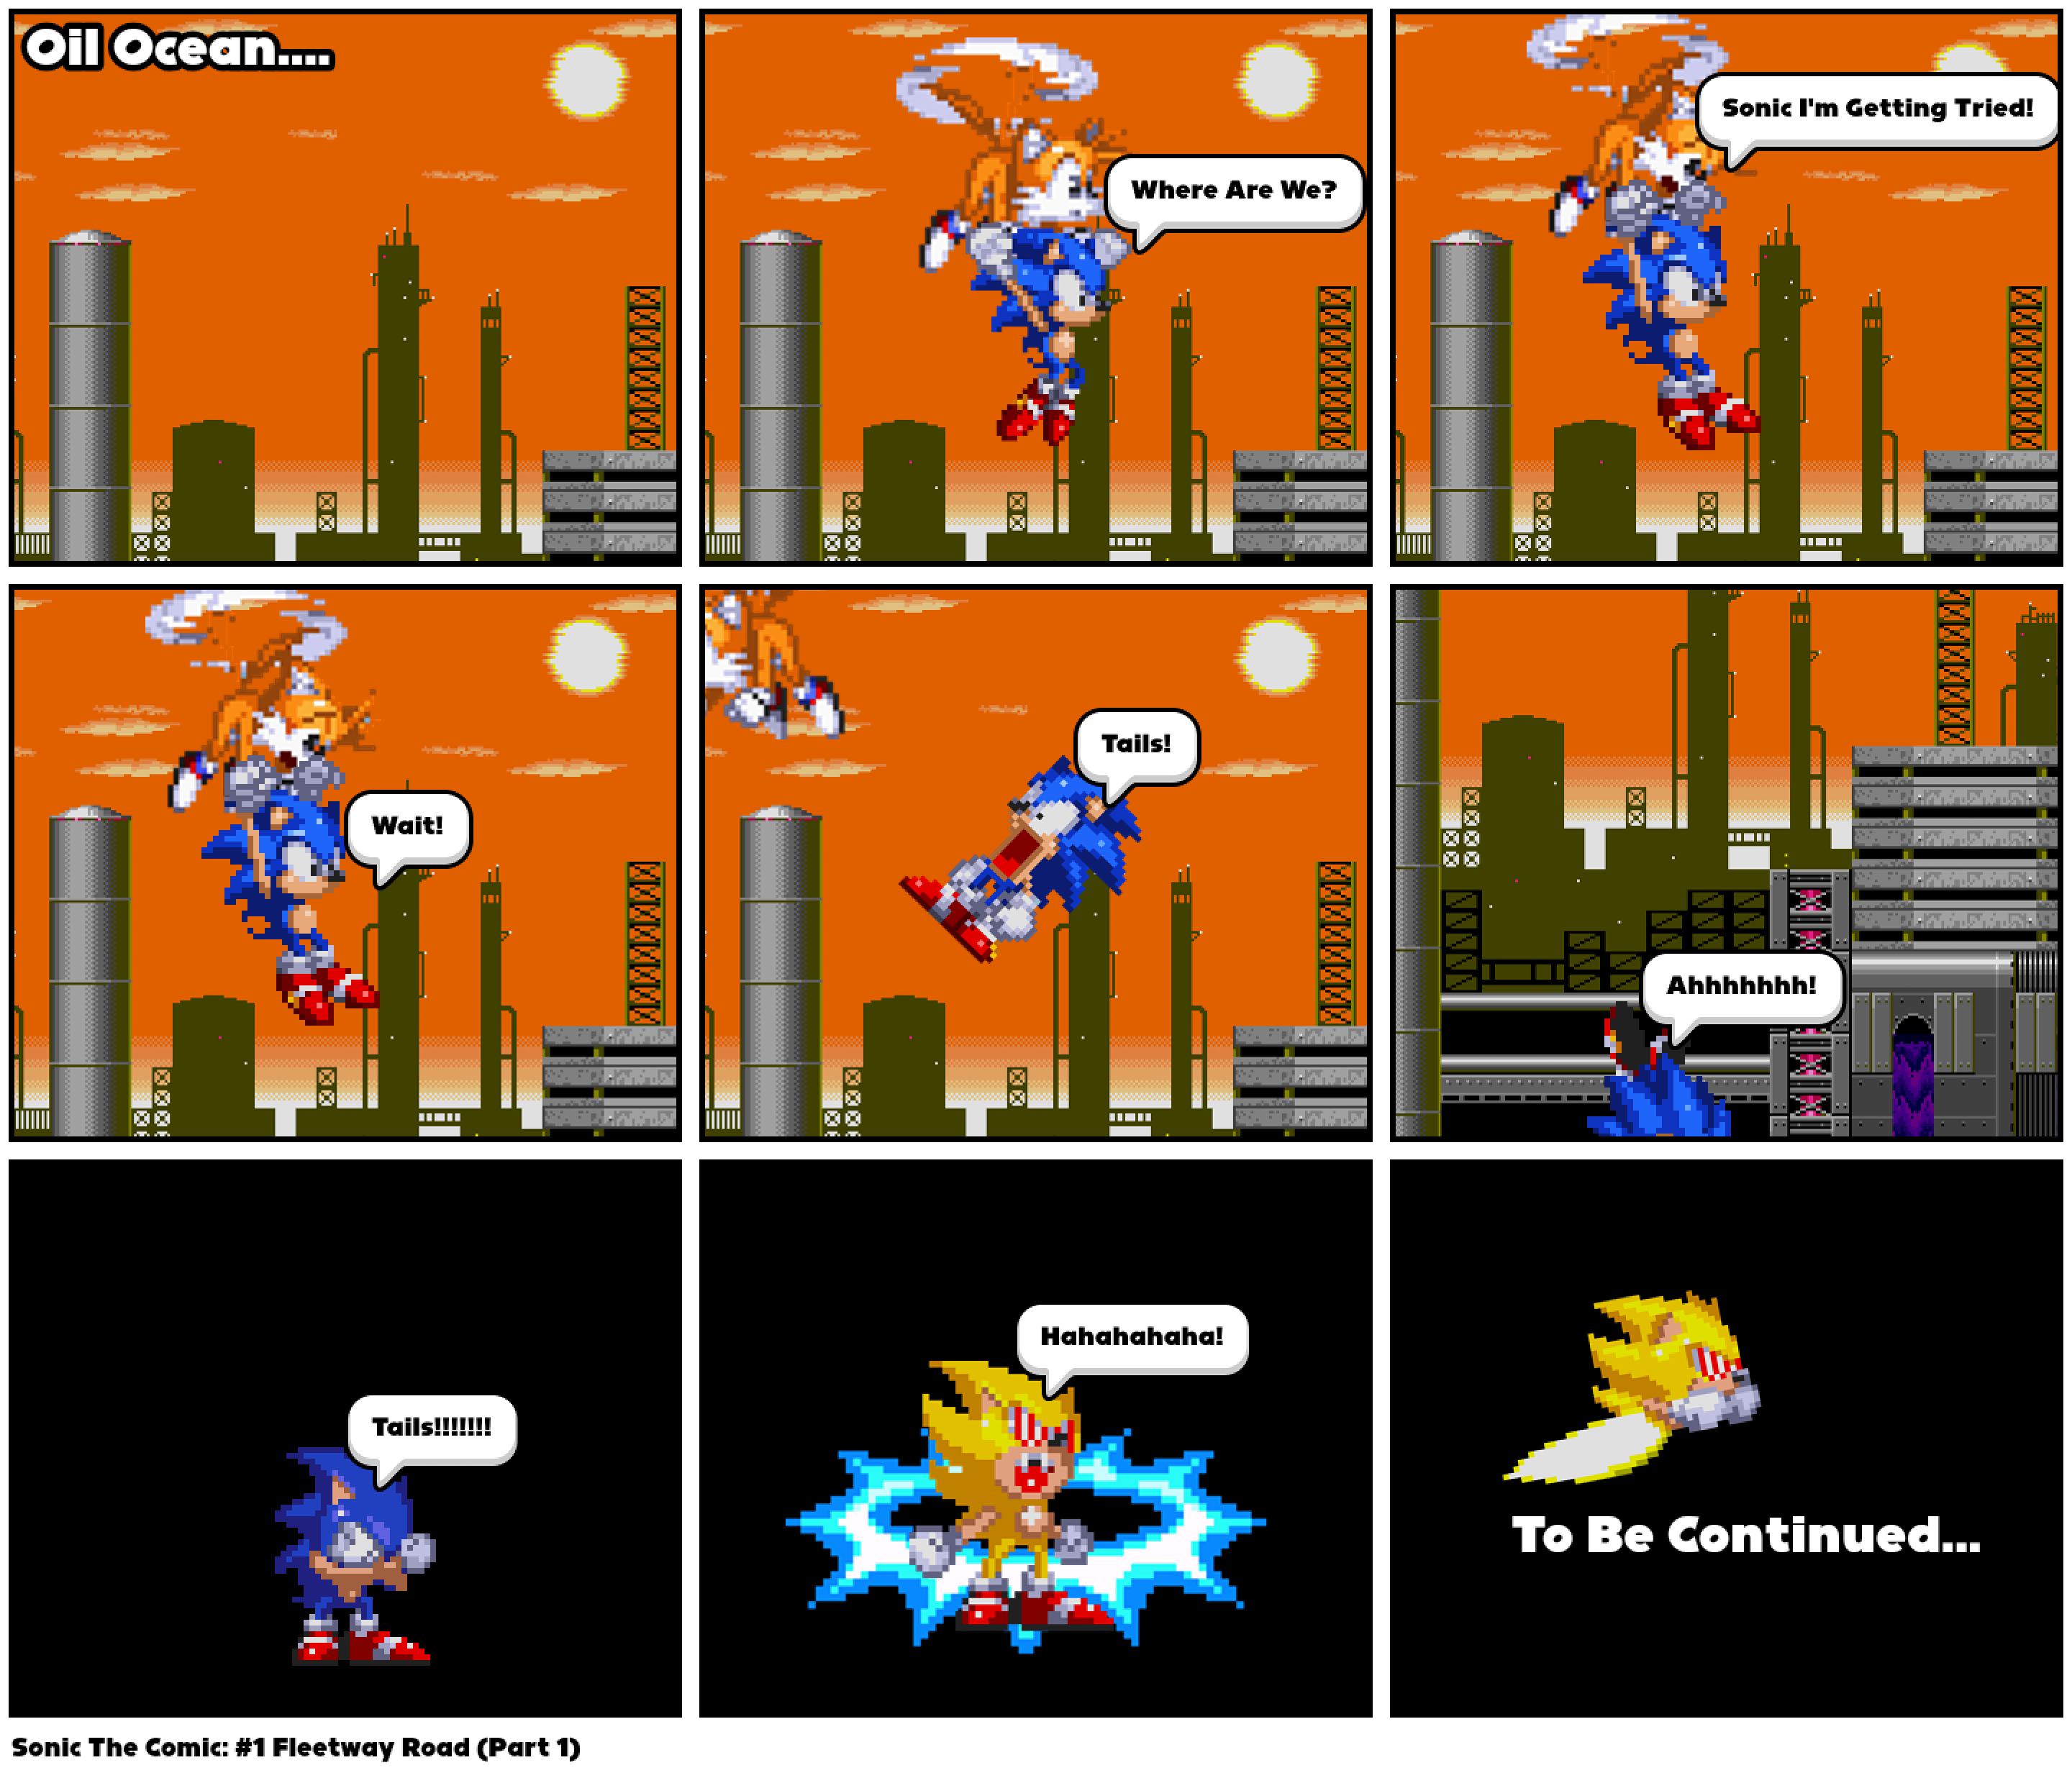 Sonic The Comic: #1 Fleetway Road (Part 1)